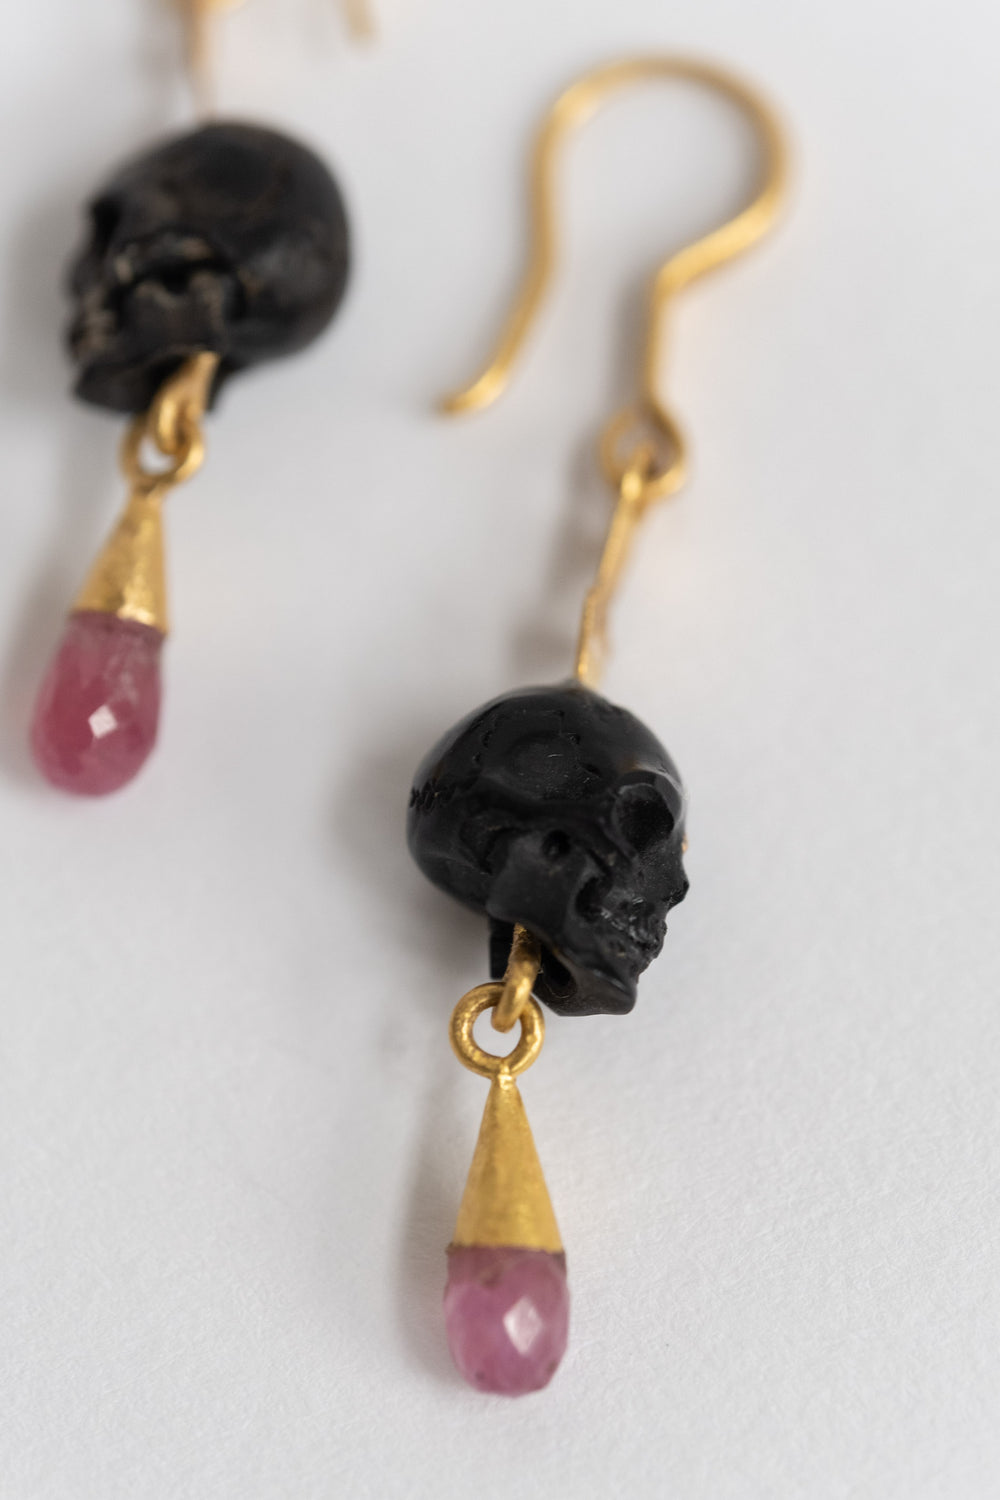 22k + Ruby Skull Earrings